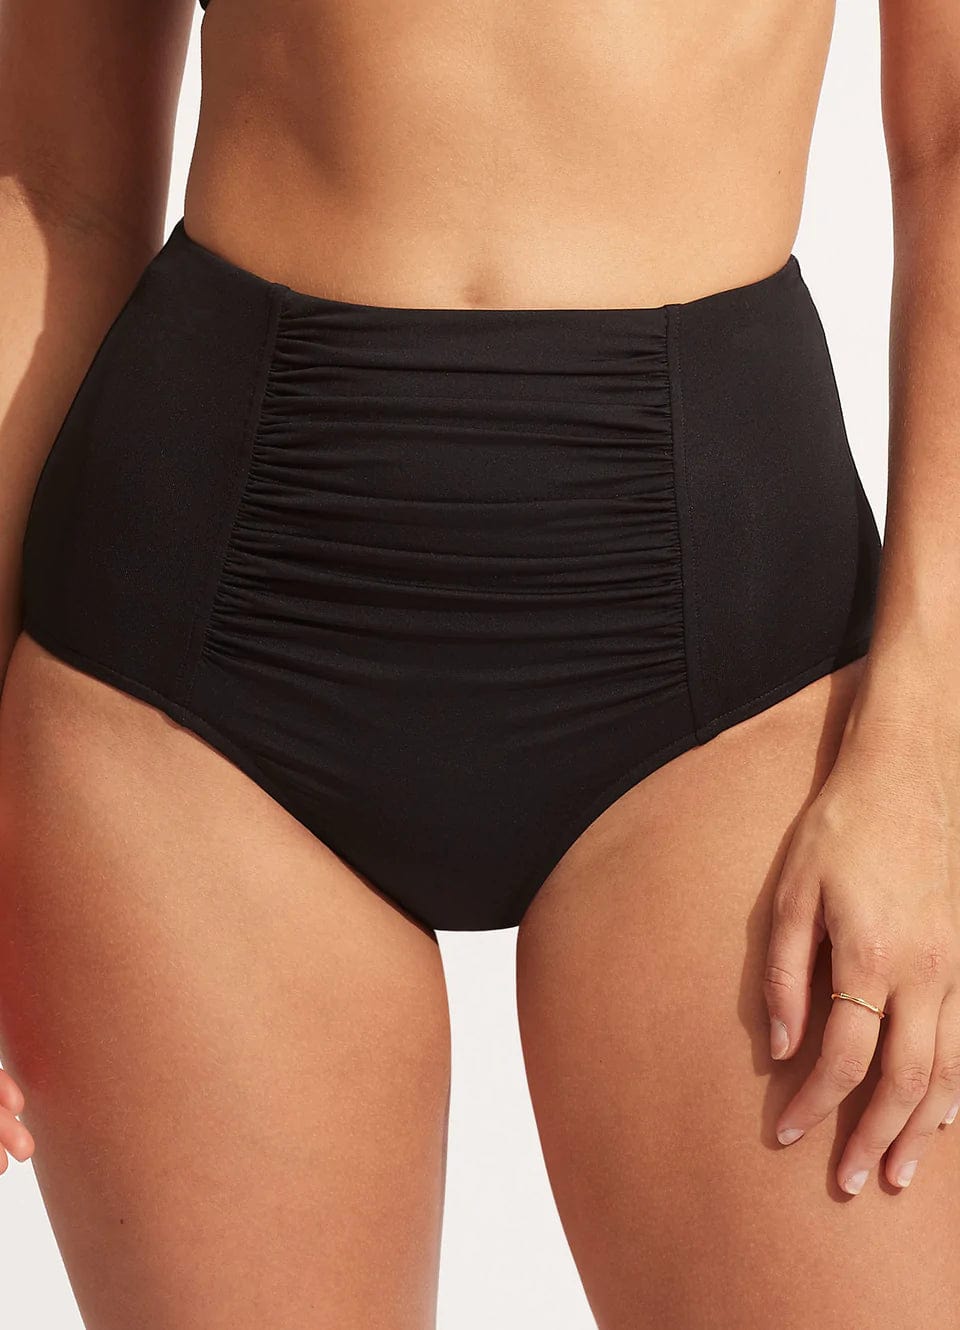 Collective High Waisted Pant - Black - Seafolly - Splash Swimwear  - bikini bottoms, Feb22, Seafolly, Womens, womens swim - Splash Swimwear 